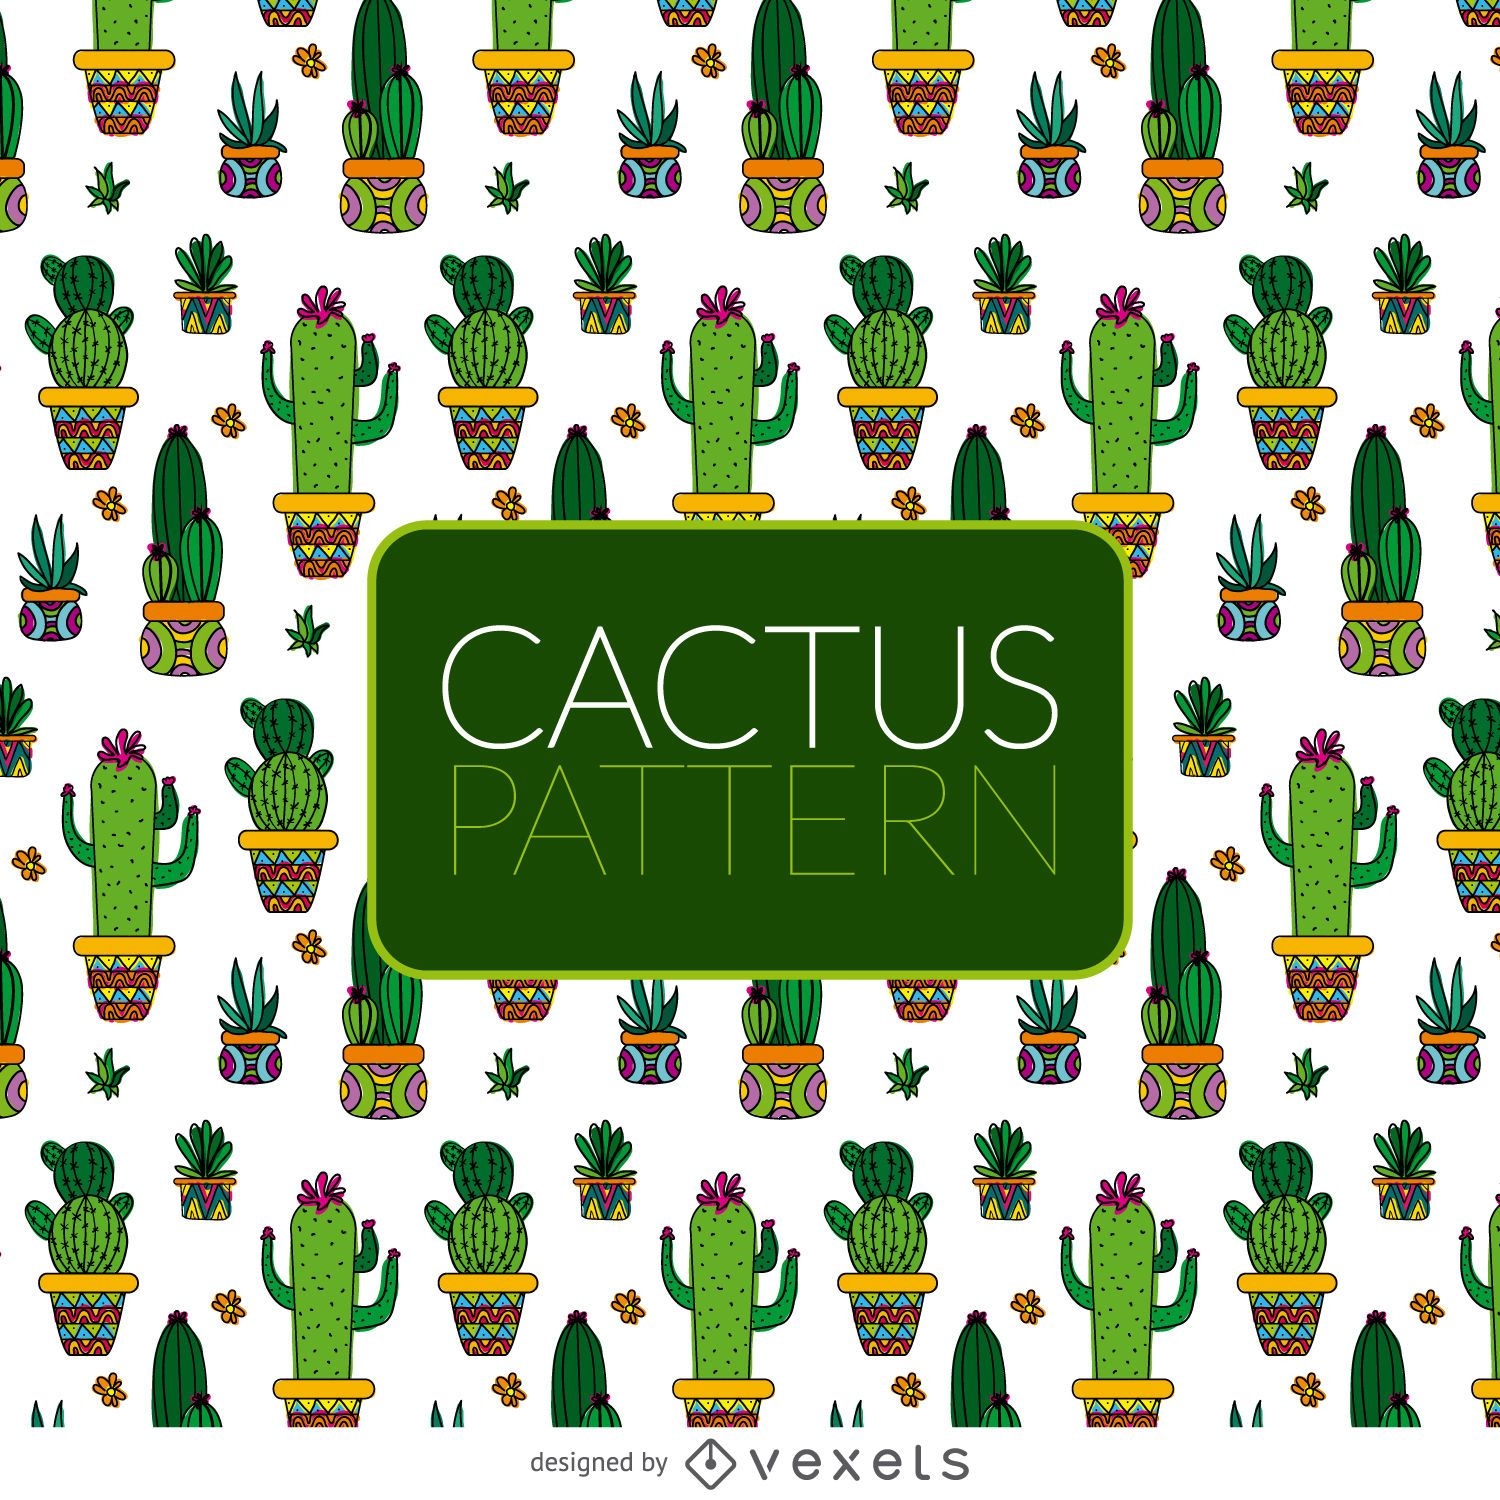 Cactus illustration pattern